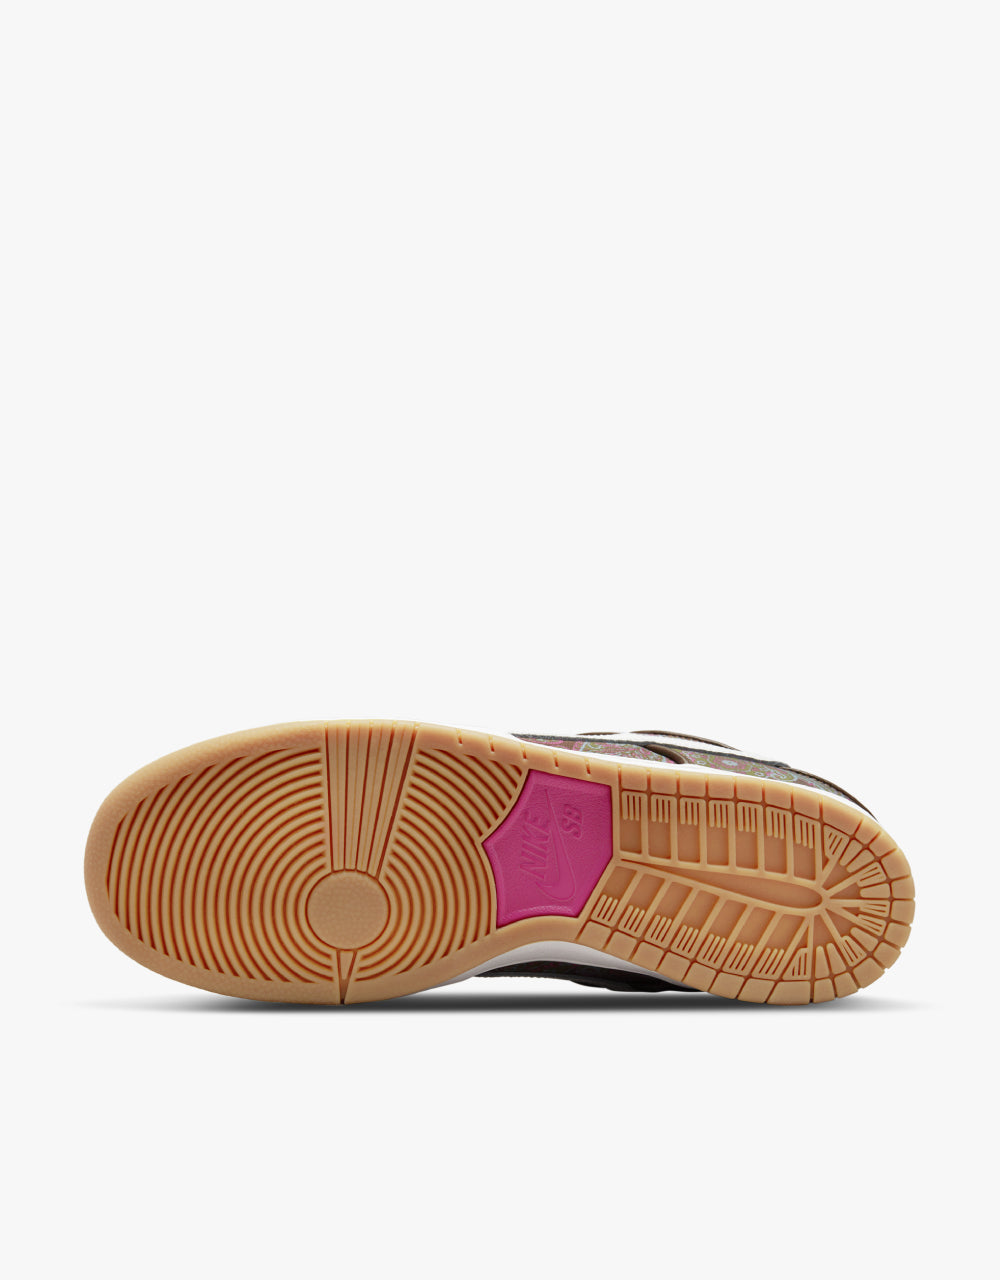 Nike SB 'Paisley' Dunk Low Skate Shoes